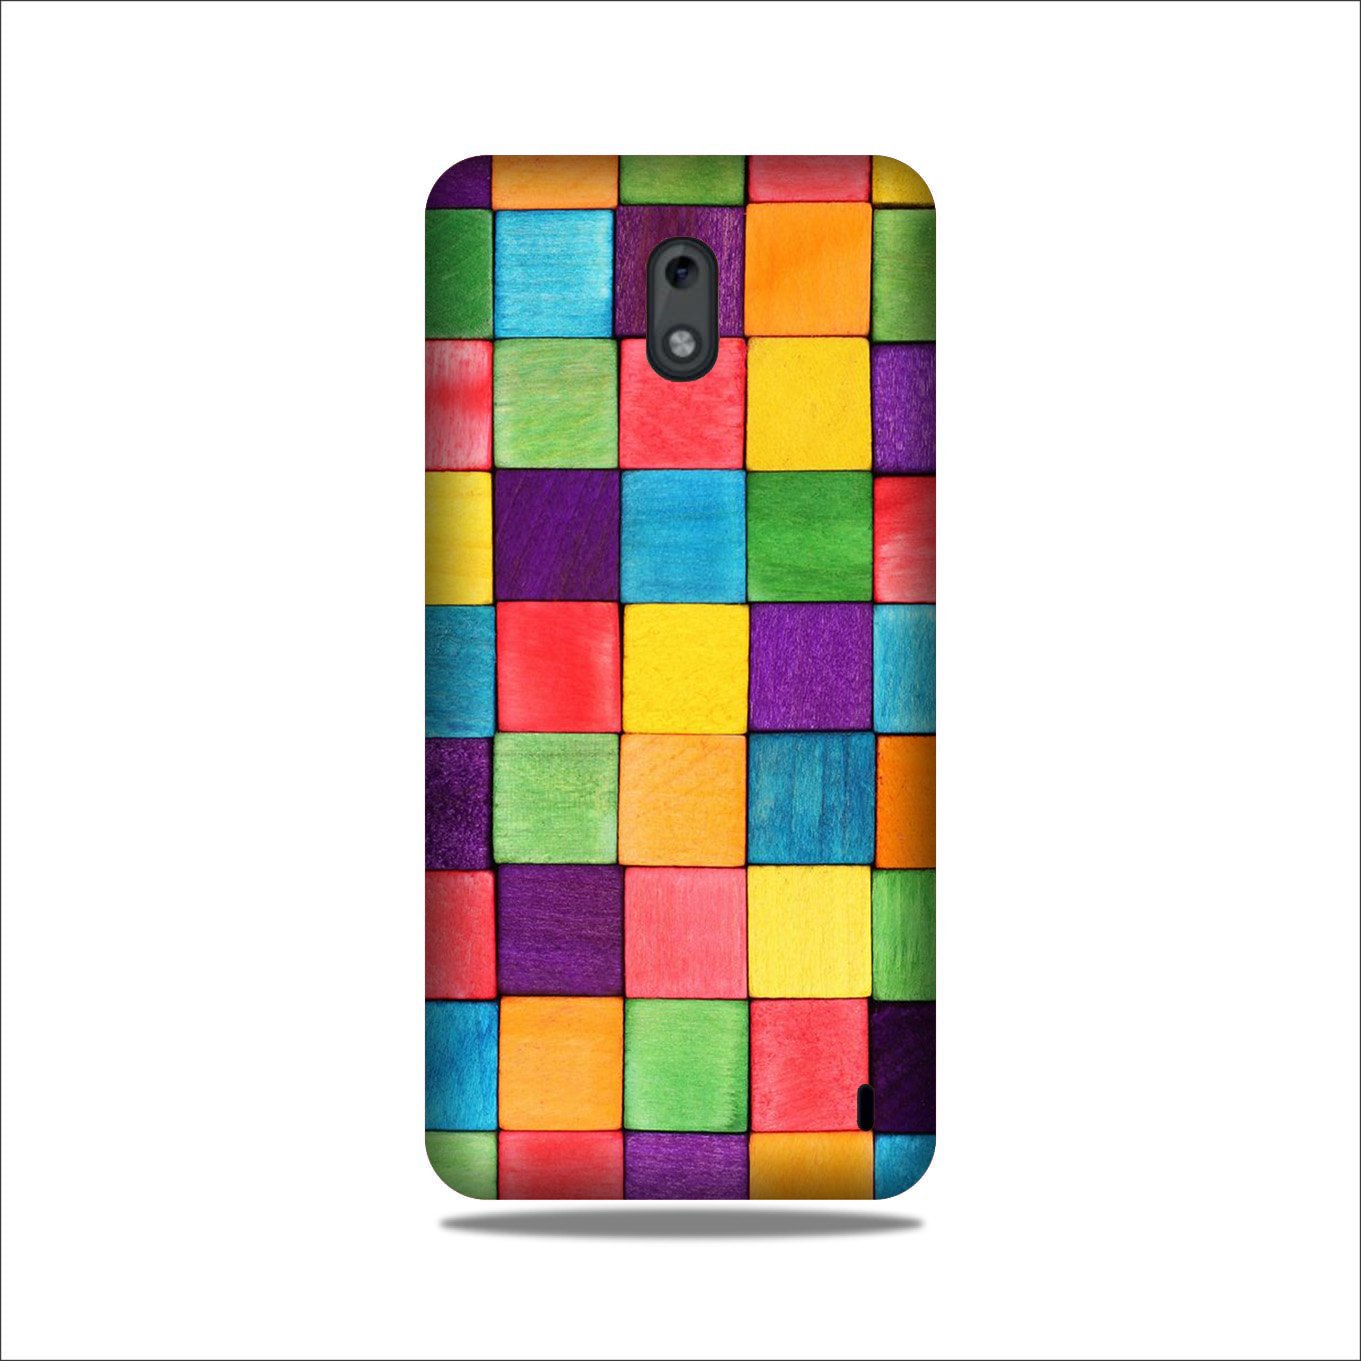 Colorful Square Case for Nokia 2.2 (Design No. 218)